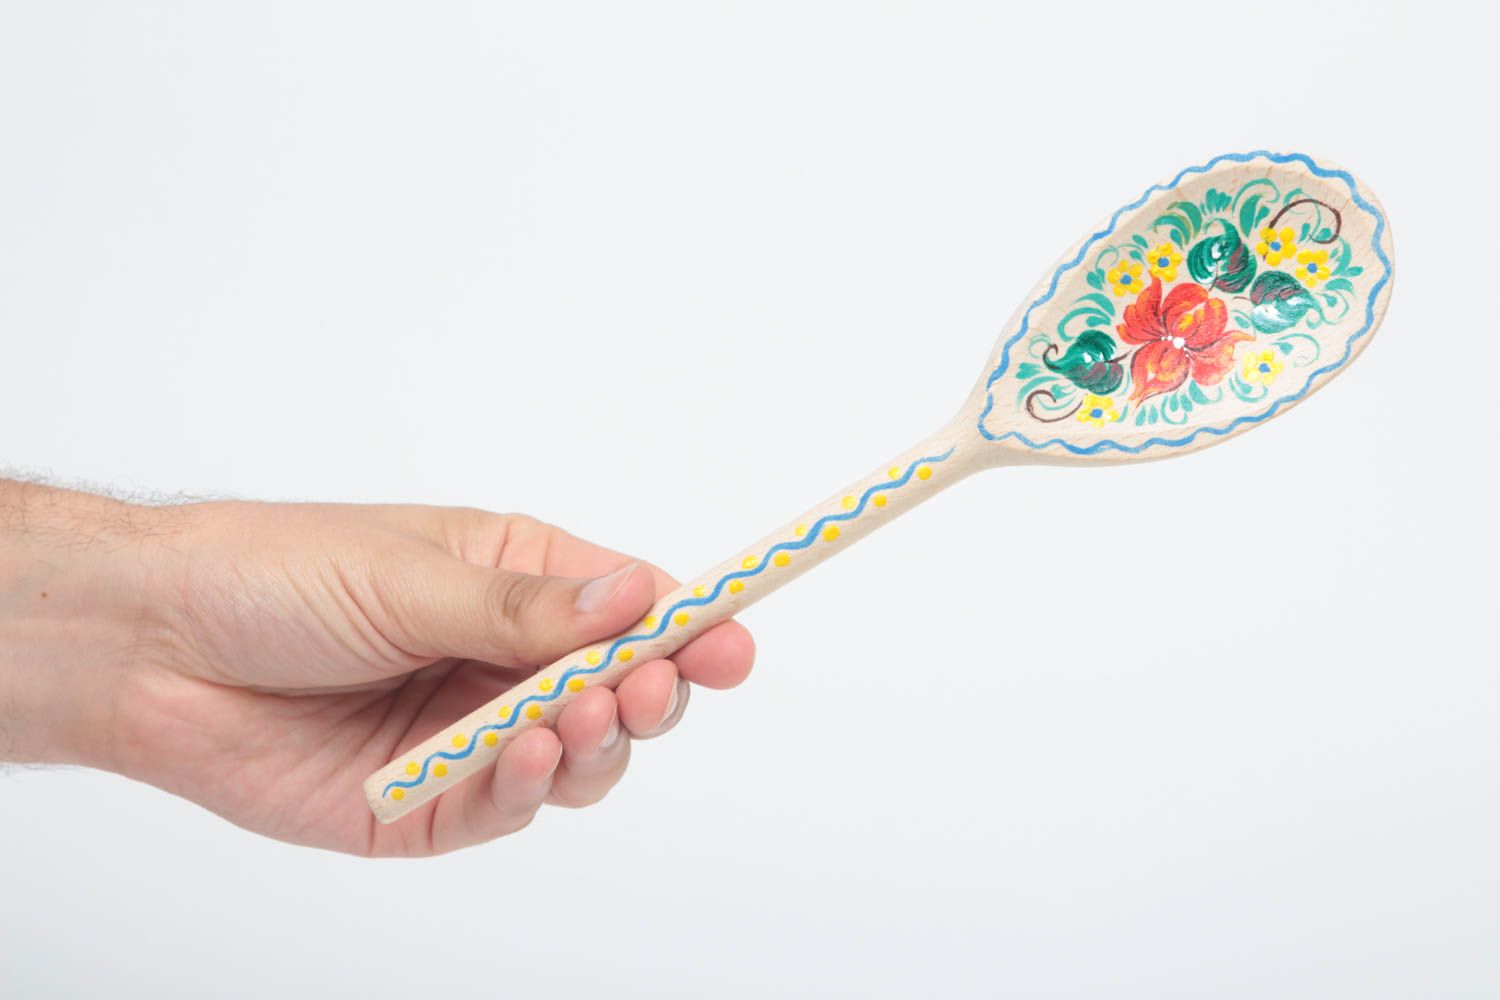 Ethnic spoon decoration ideas wooden cutlery unusual gift kitchen accessories photo 5